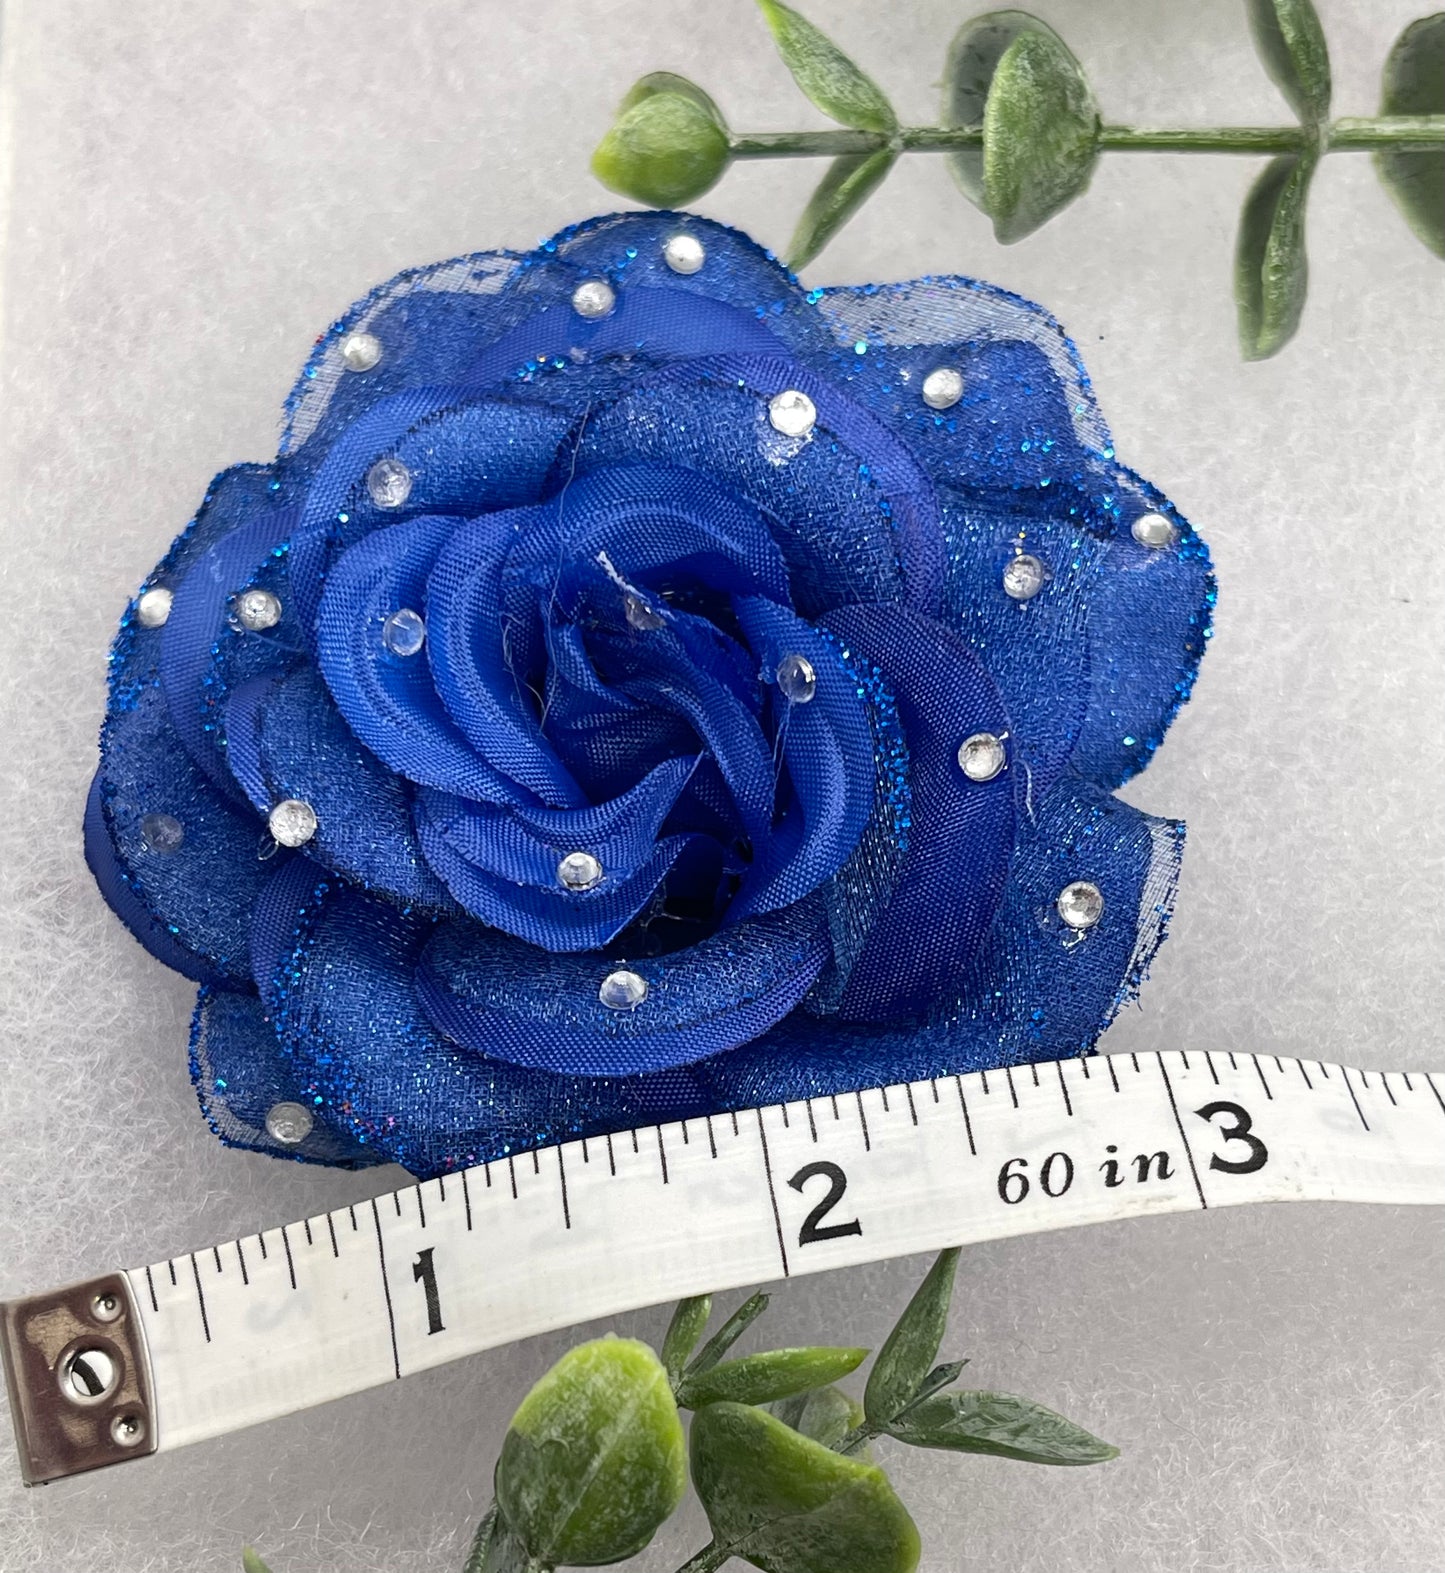 Blue Rose flower crystal rhinestone embellished alligator clip approximately 3.0” formal hair accessory wedding bridal